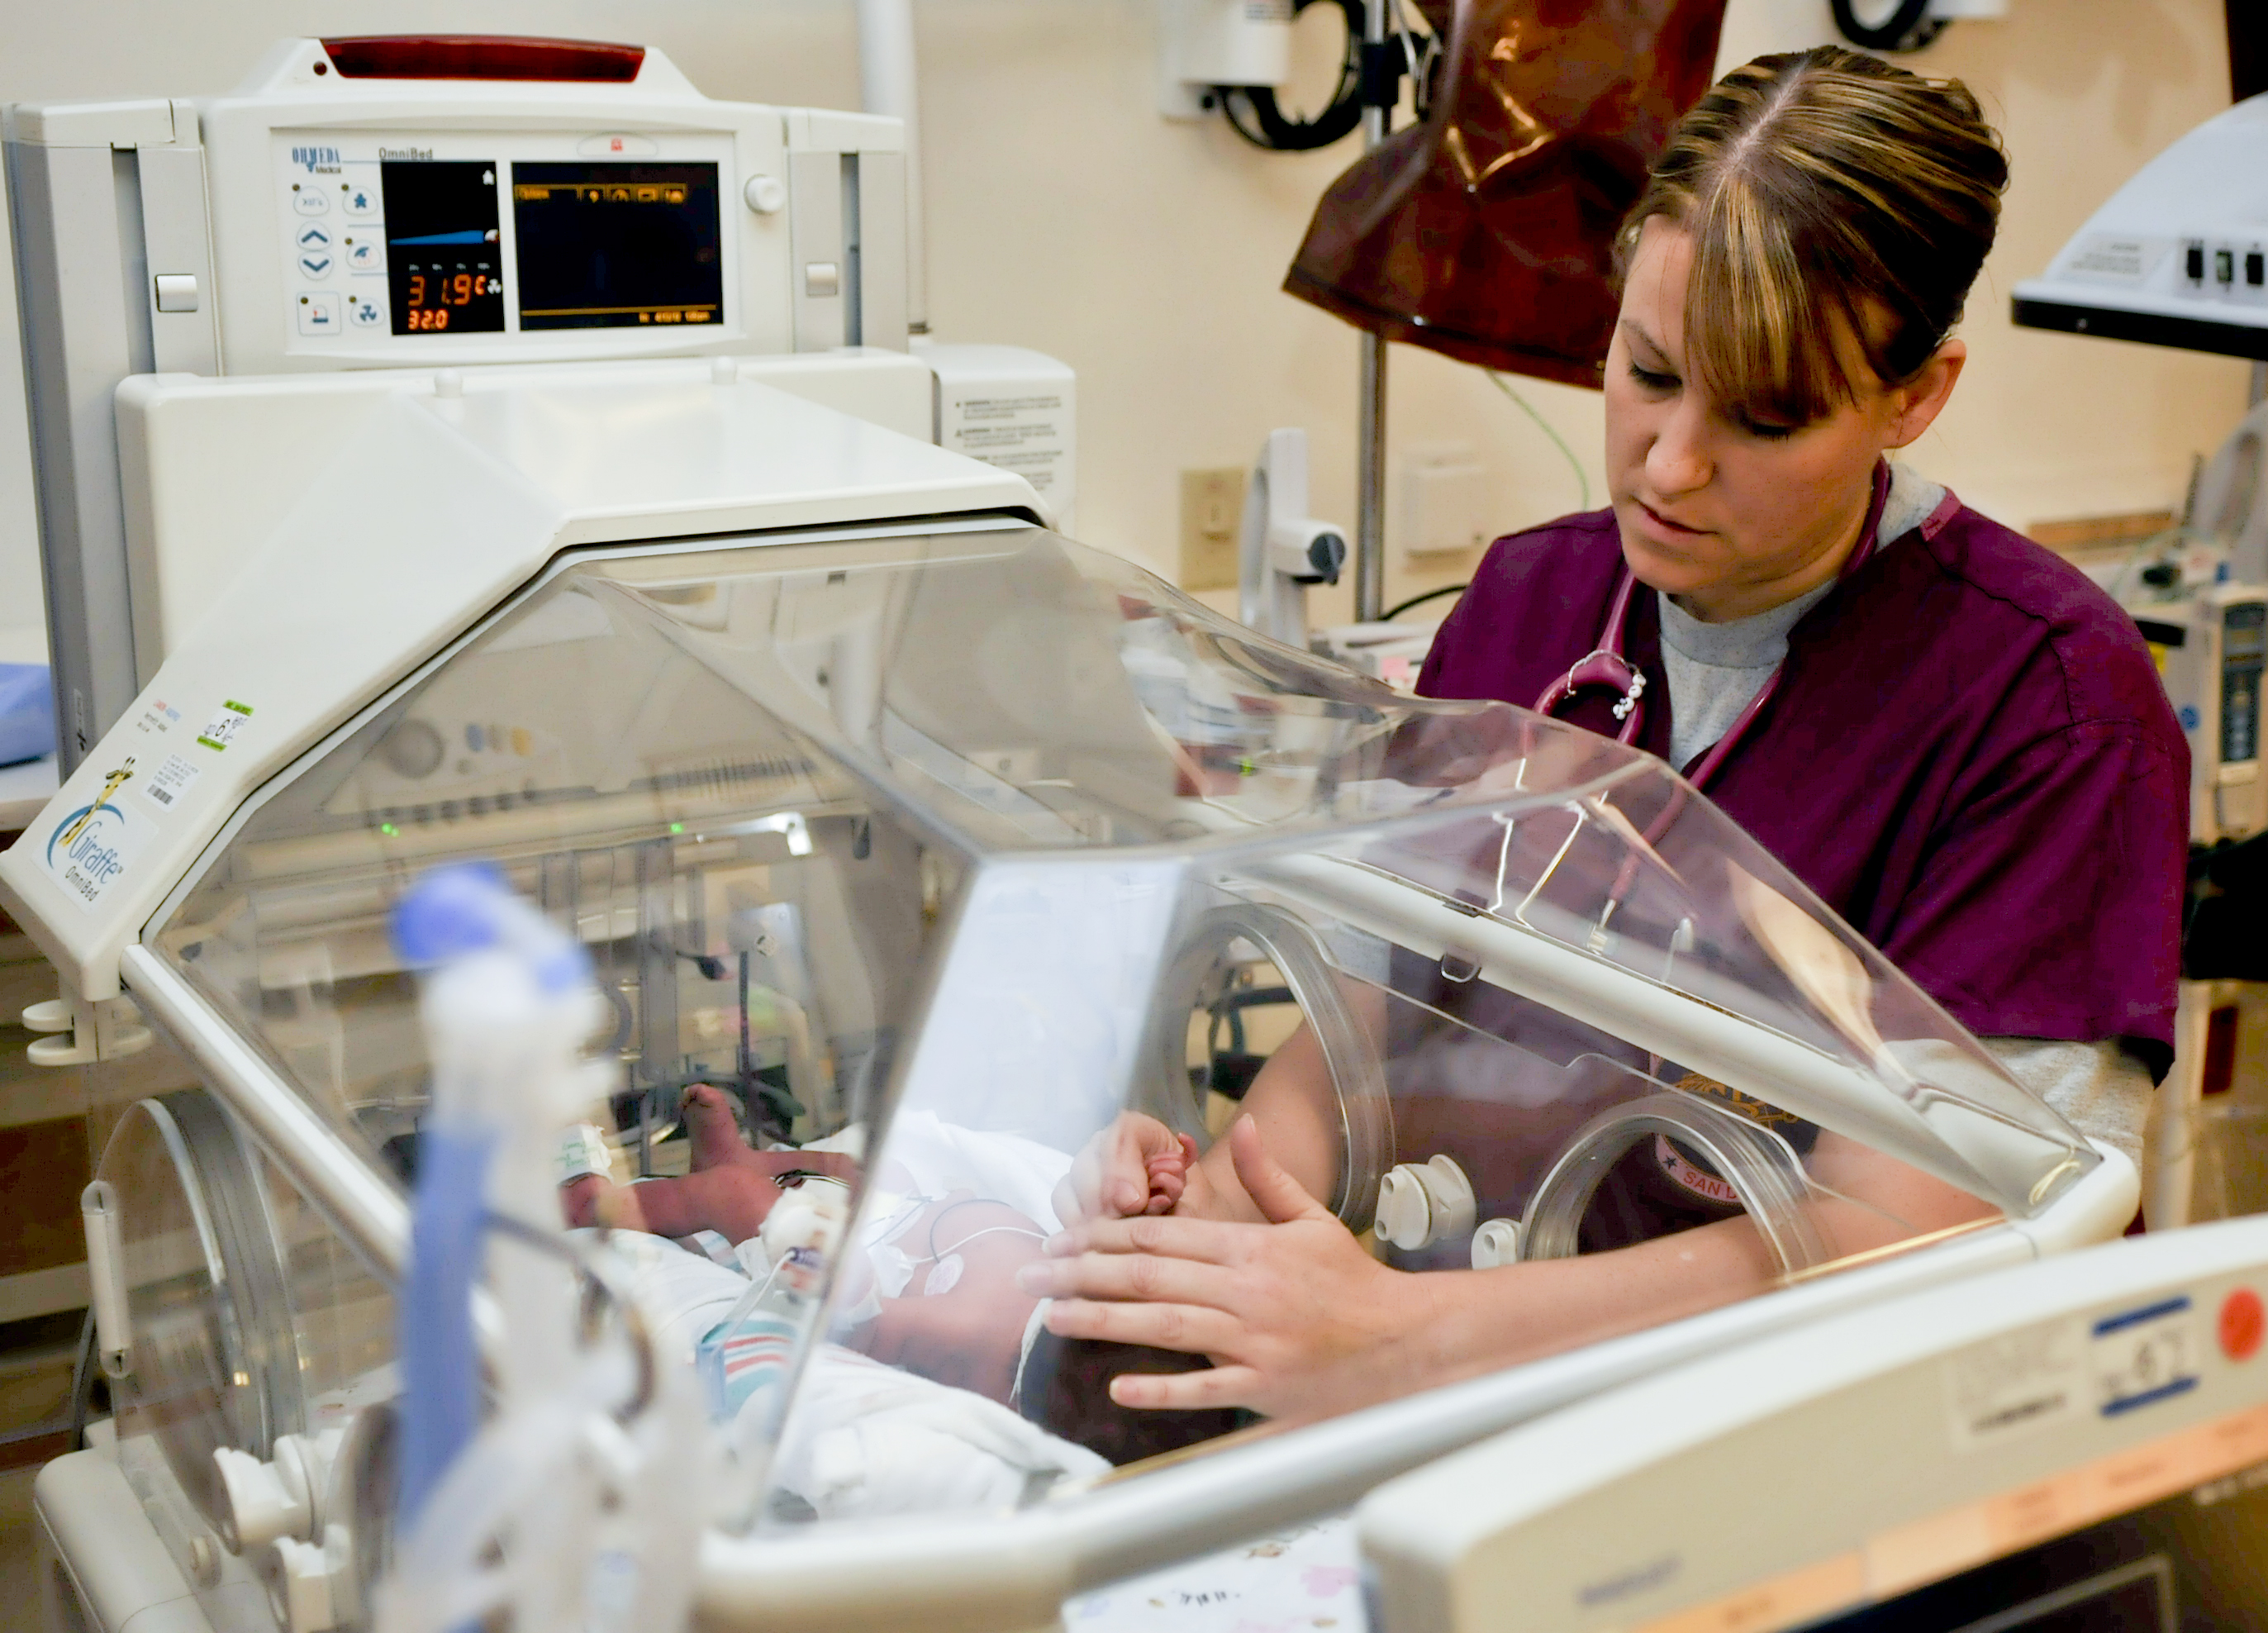 pielęgniarka noworodek inkubator szpital - flickr.com cc